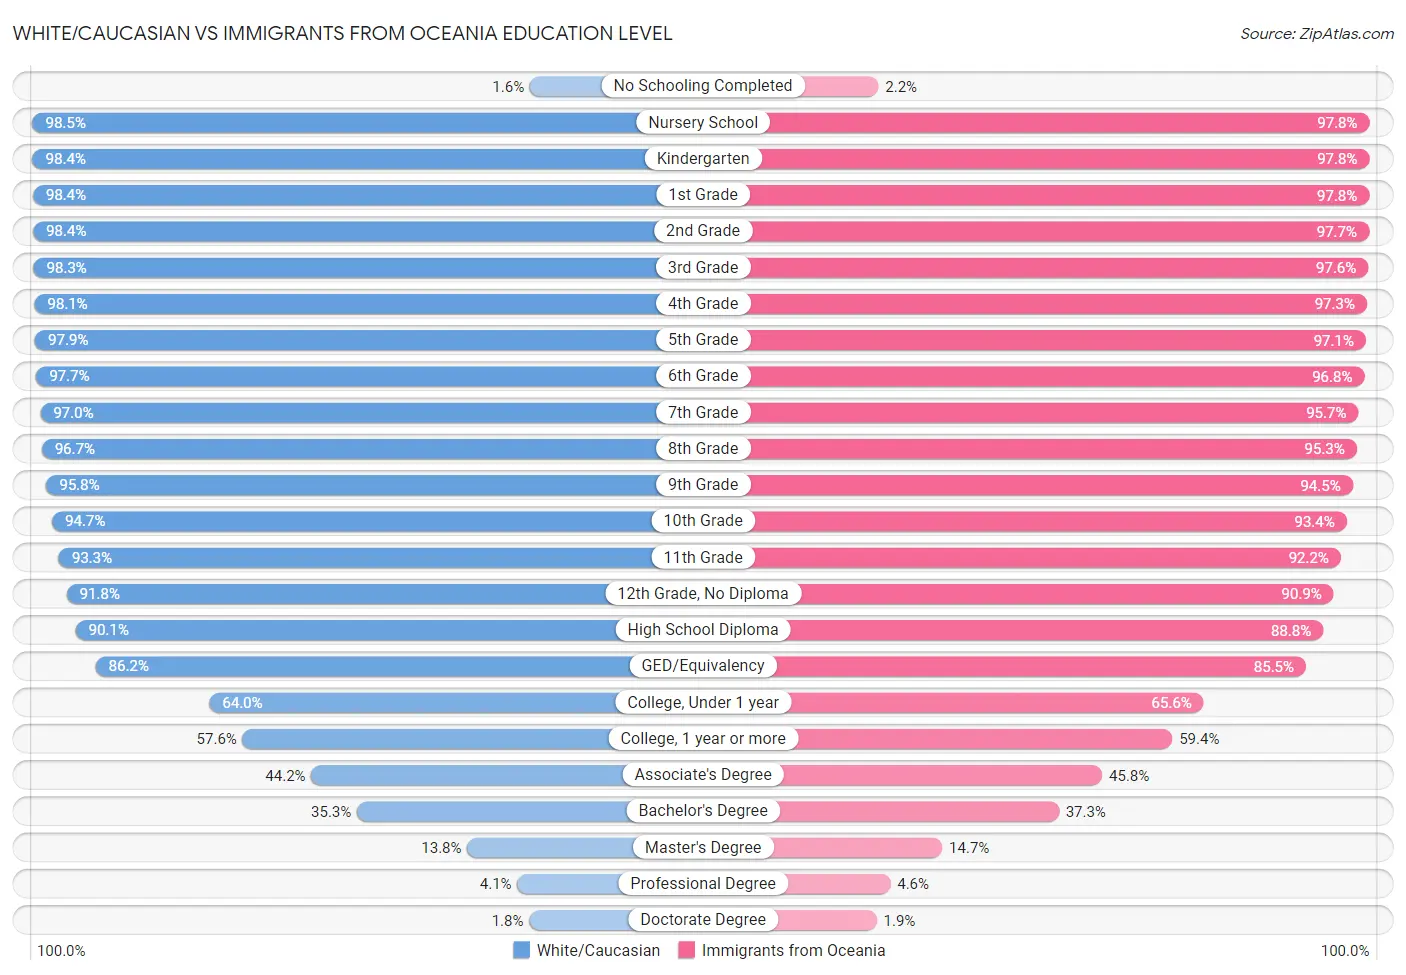 White/Caucasian vs Immigrants from Oceania Education Level